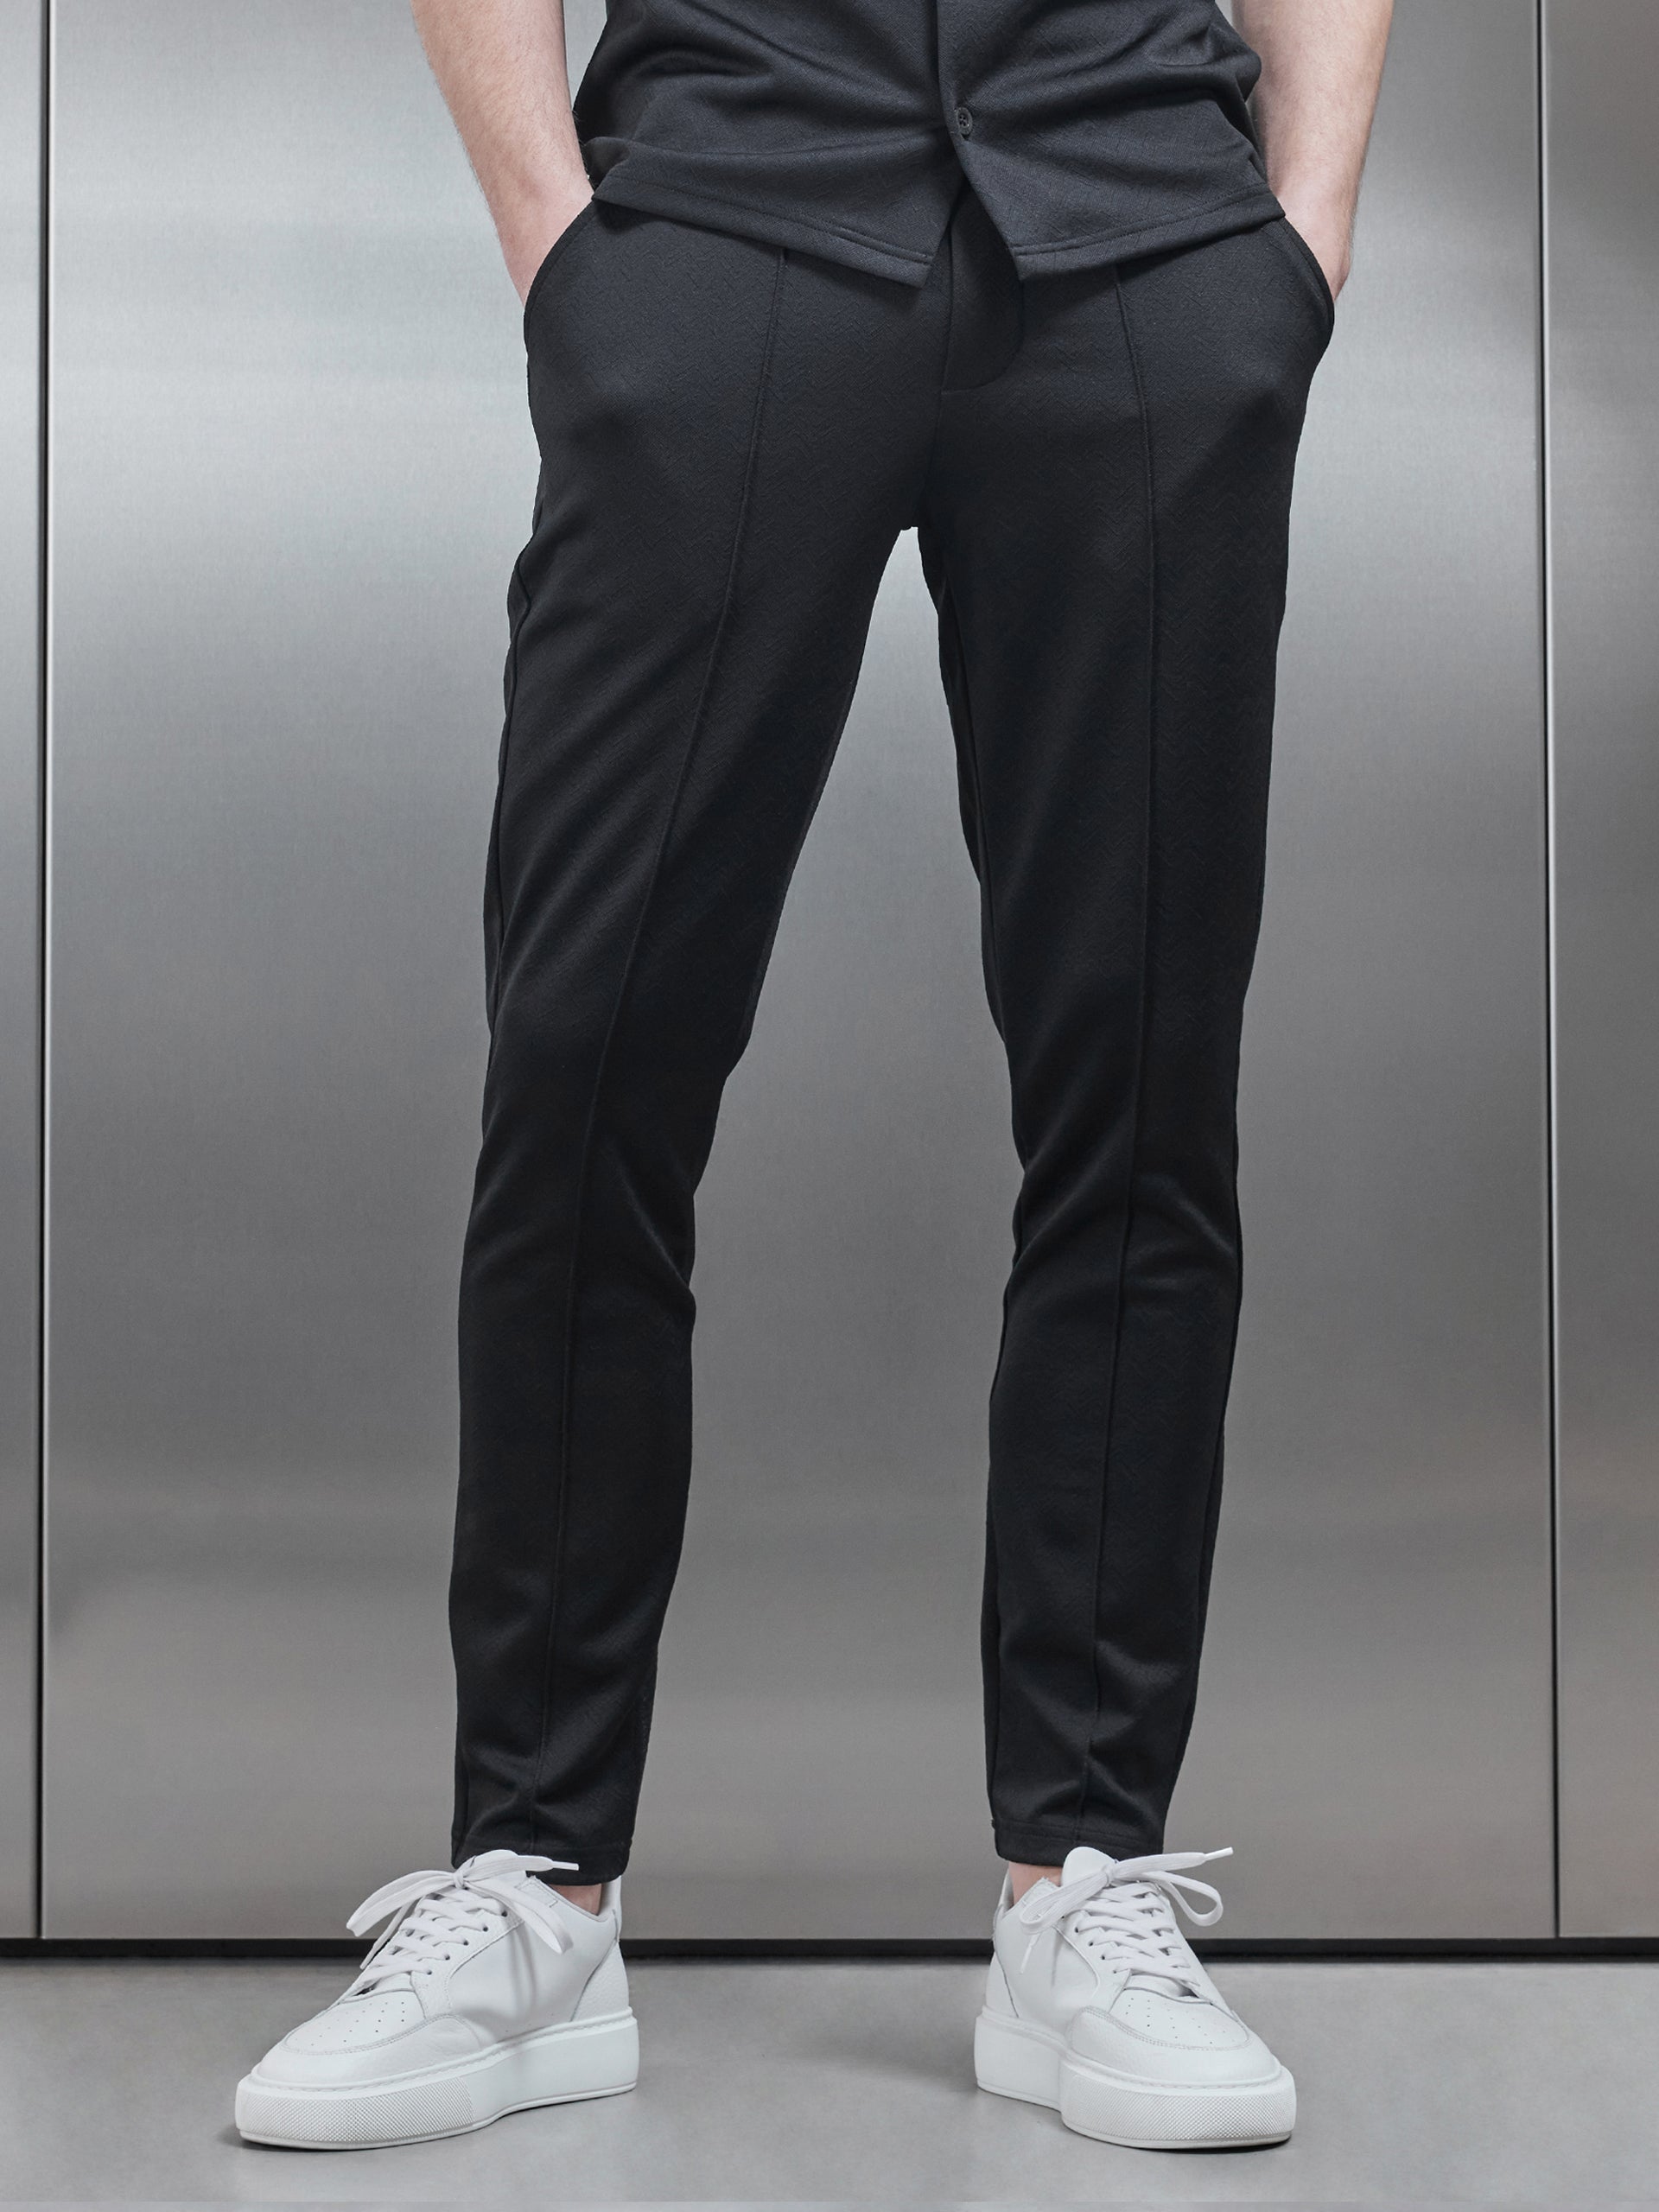 43 Men's Fashion Gray Pants ideas | mens fashion, mens outfits, menswear